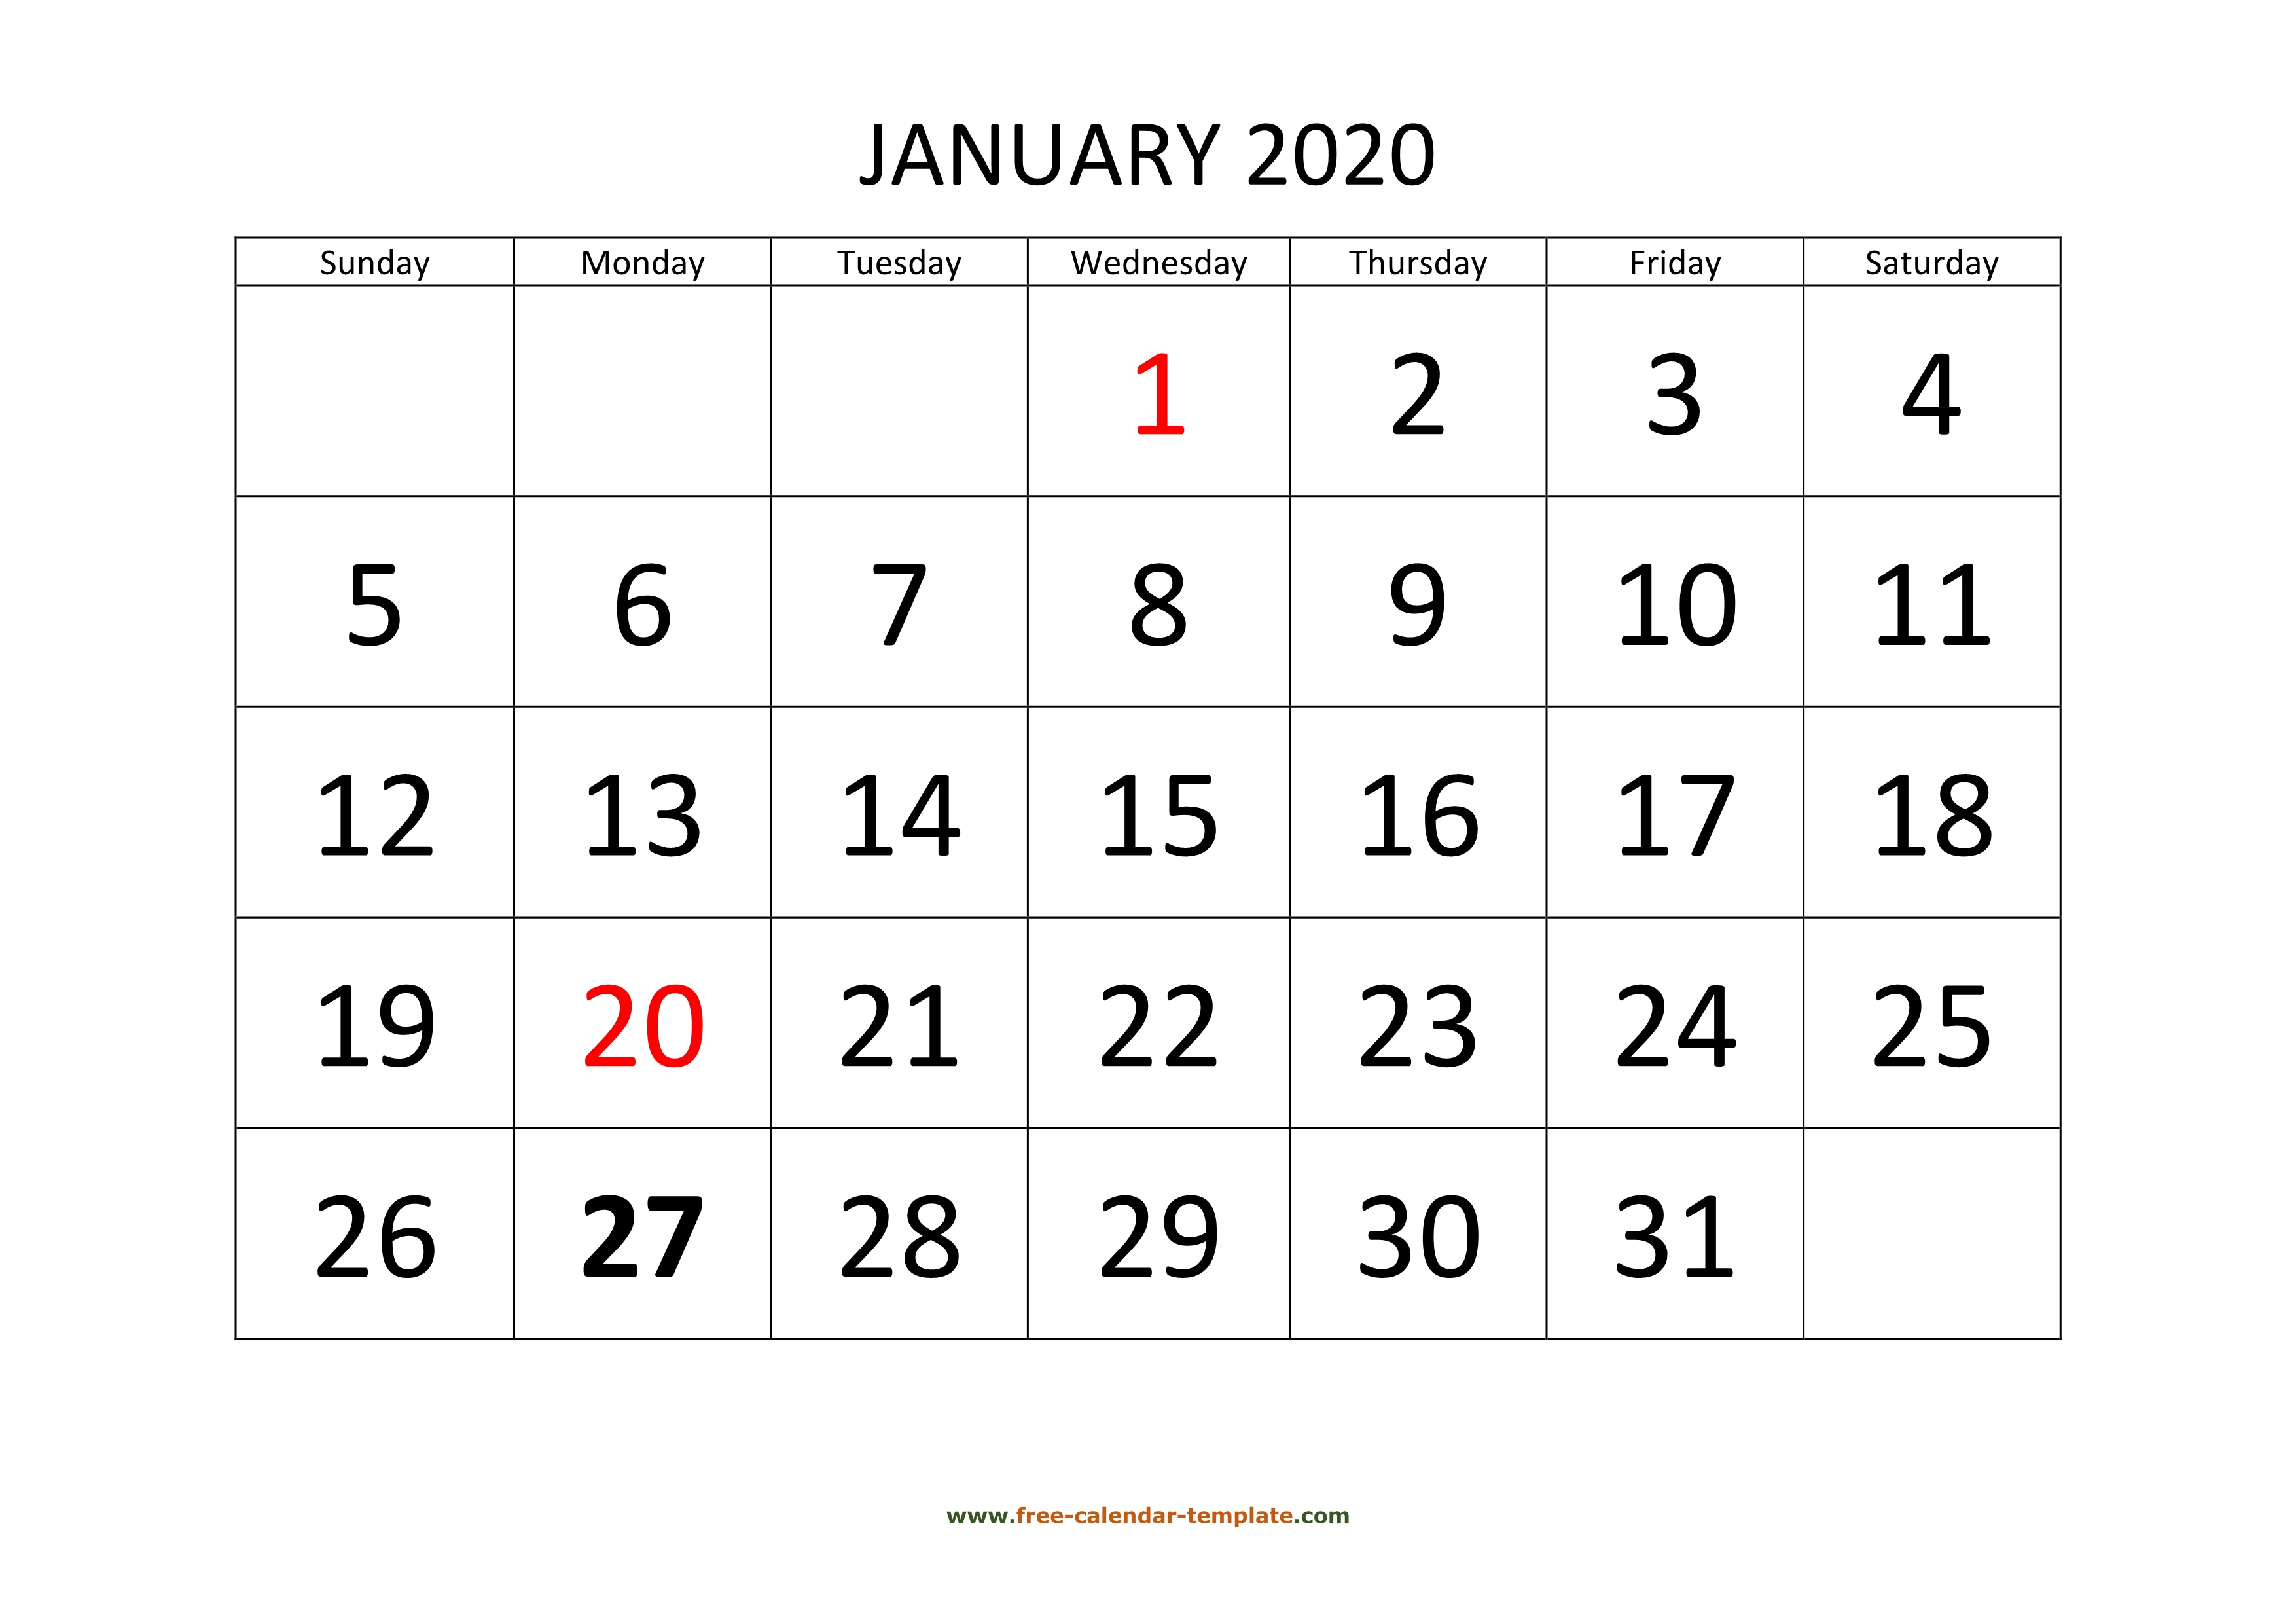 January 2020 Calendar Designed With Large Font (Horizontal